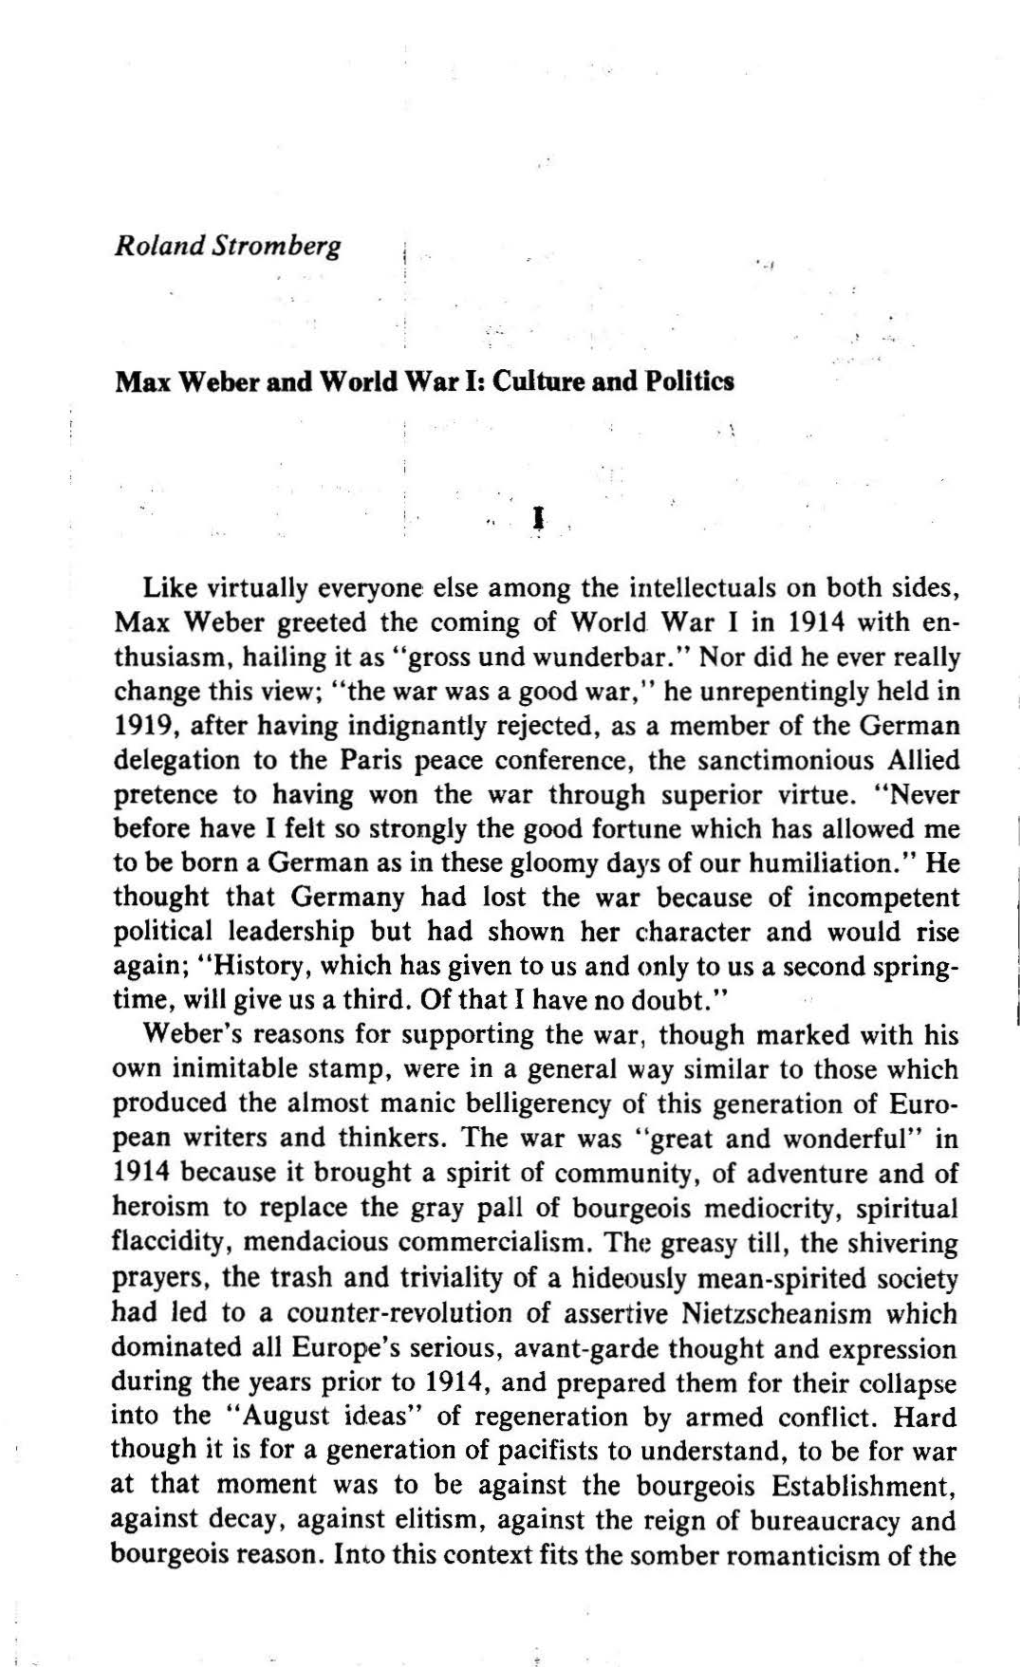 Max Weber and World War 1: Culture and Politics